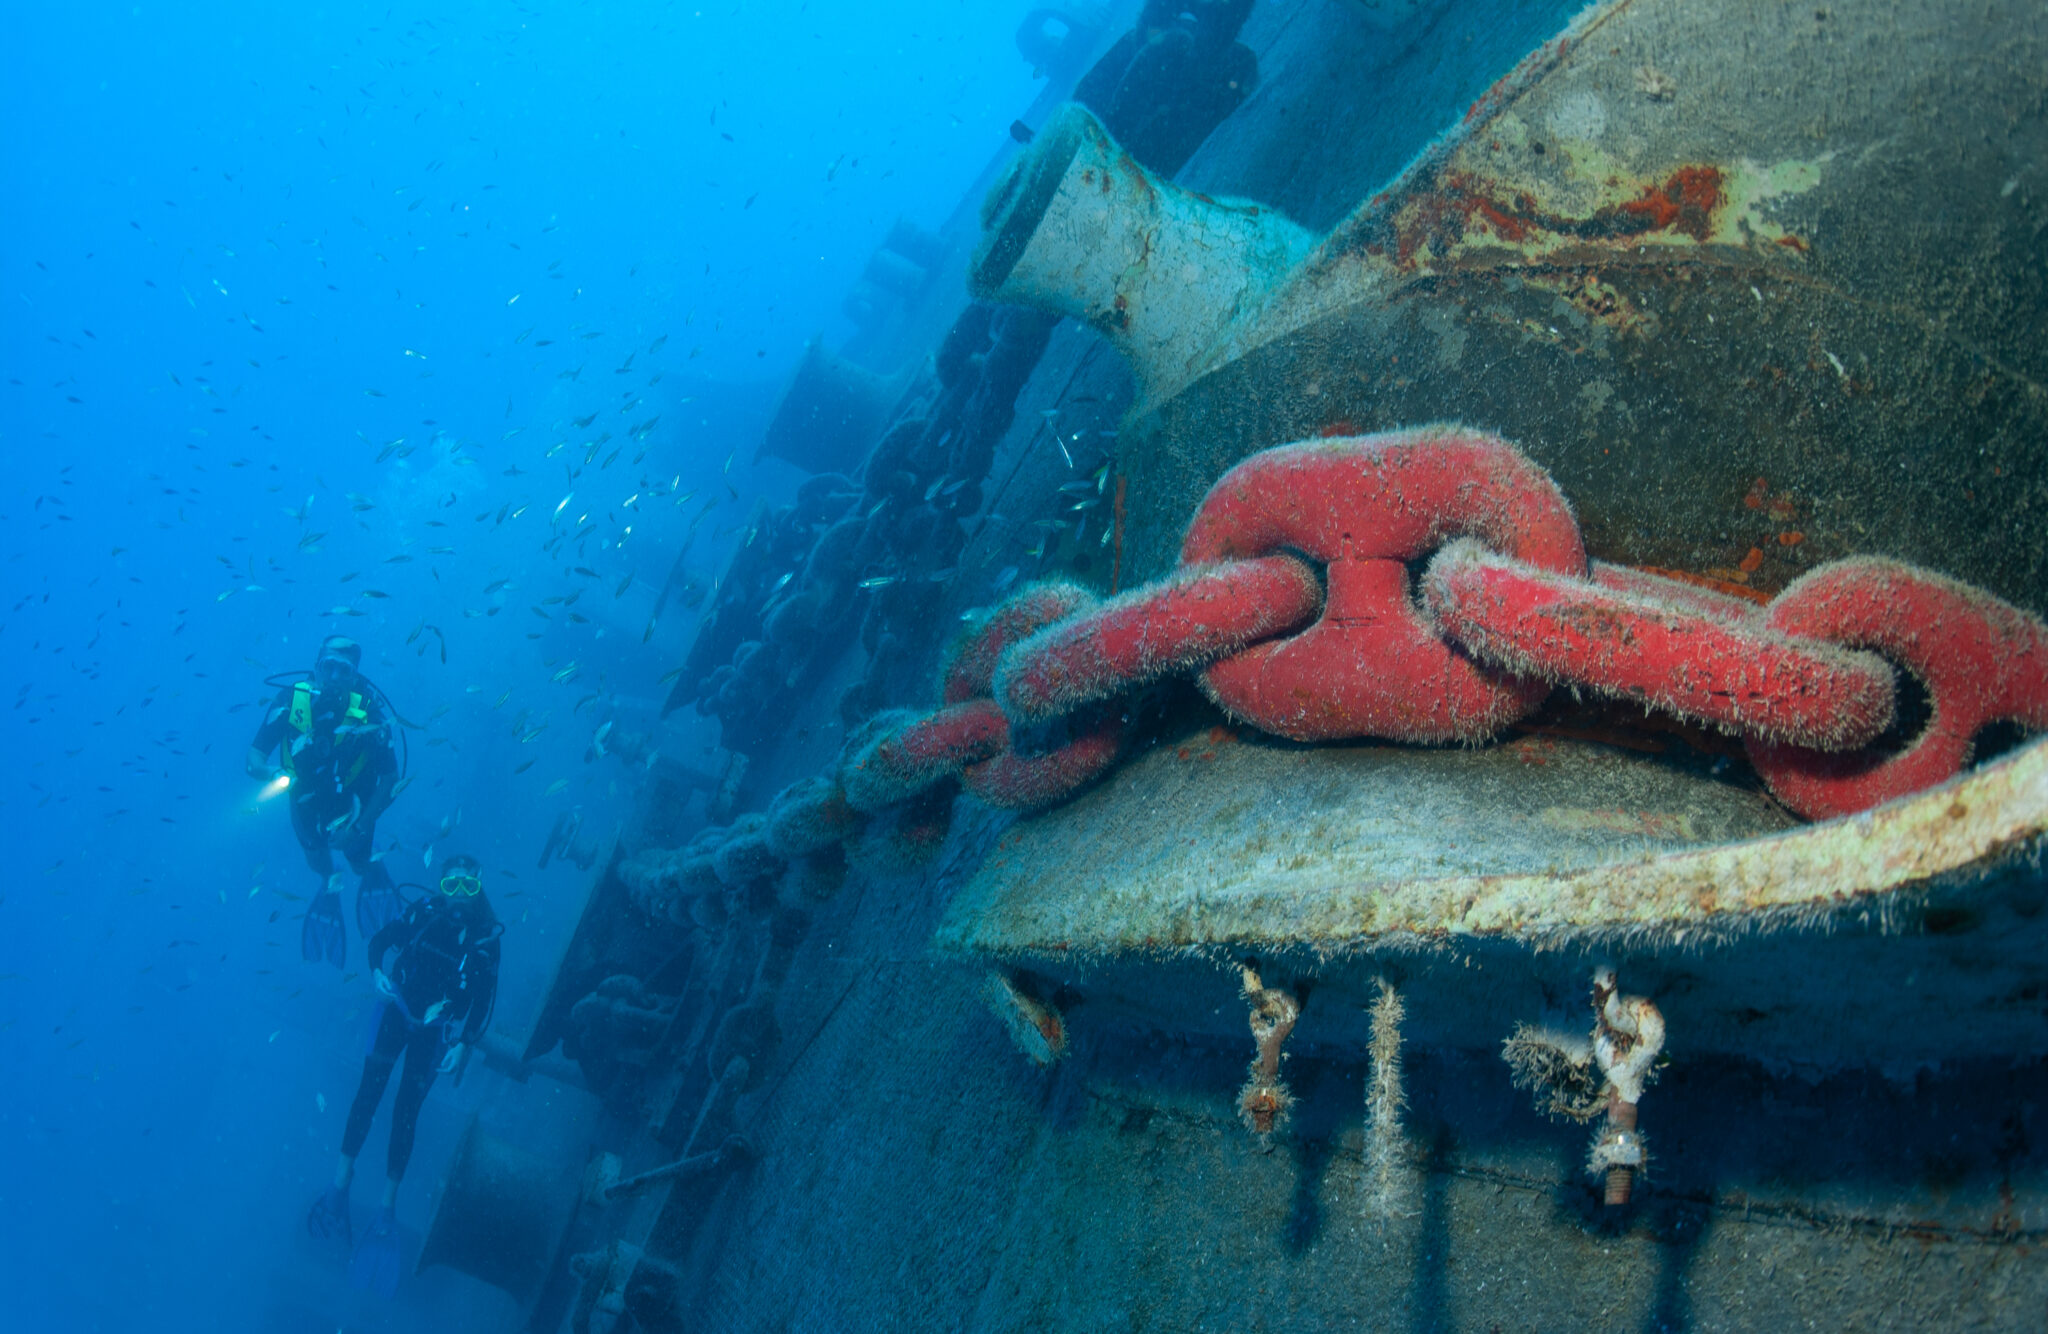 A shipwreck sits sideways underwater.